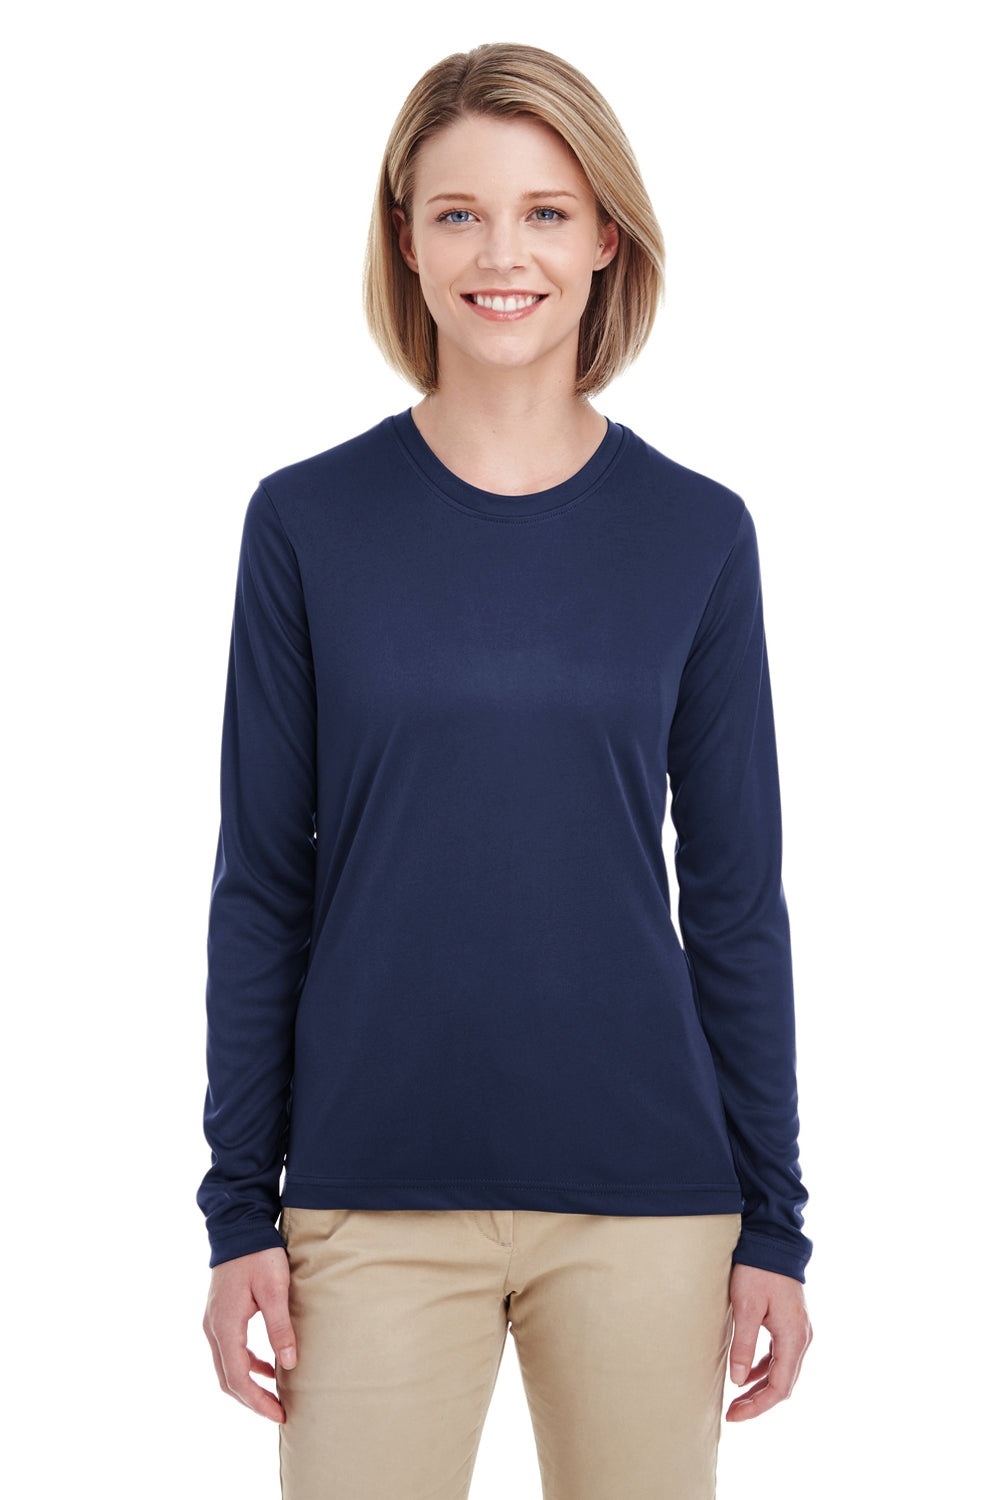 UltraClub Womens Cool & Dry Performance Moisture Wicking Long Sleeve  Crewneck T-Shirt - Navy Blue